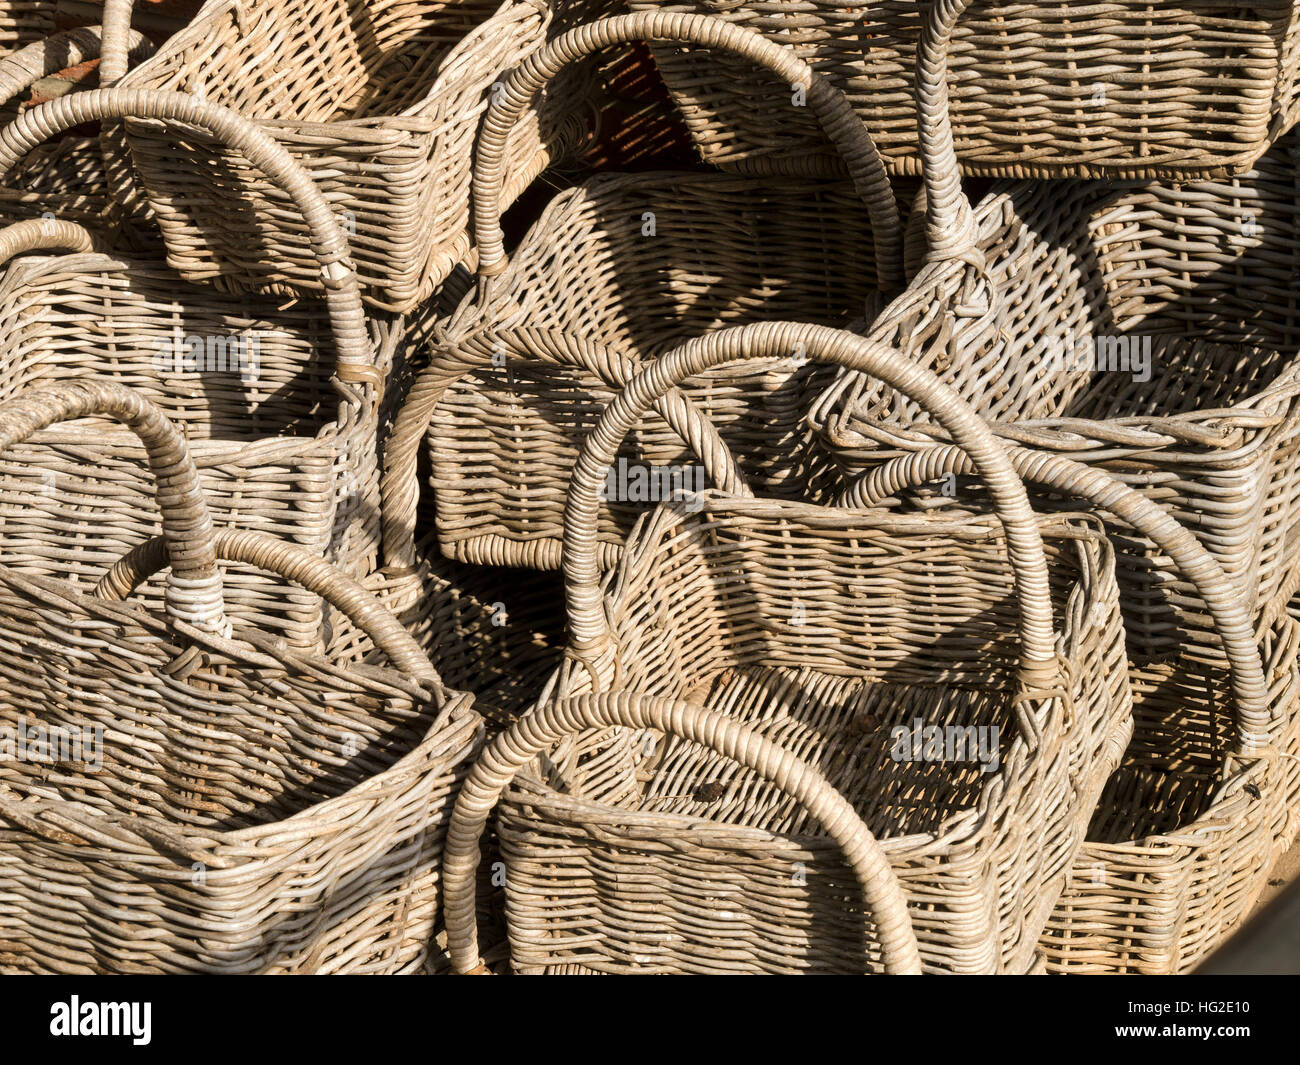 Wicker shopping baskets Stock Photo